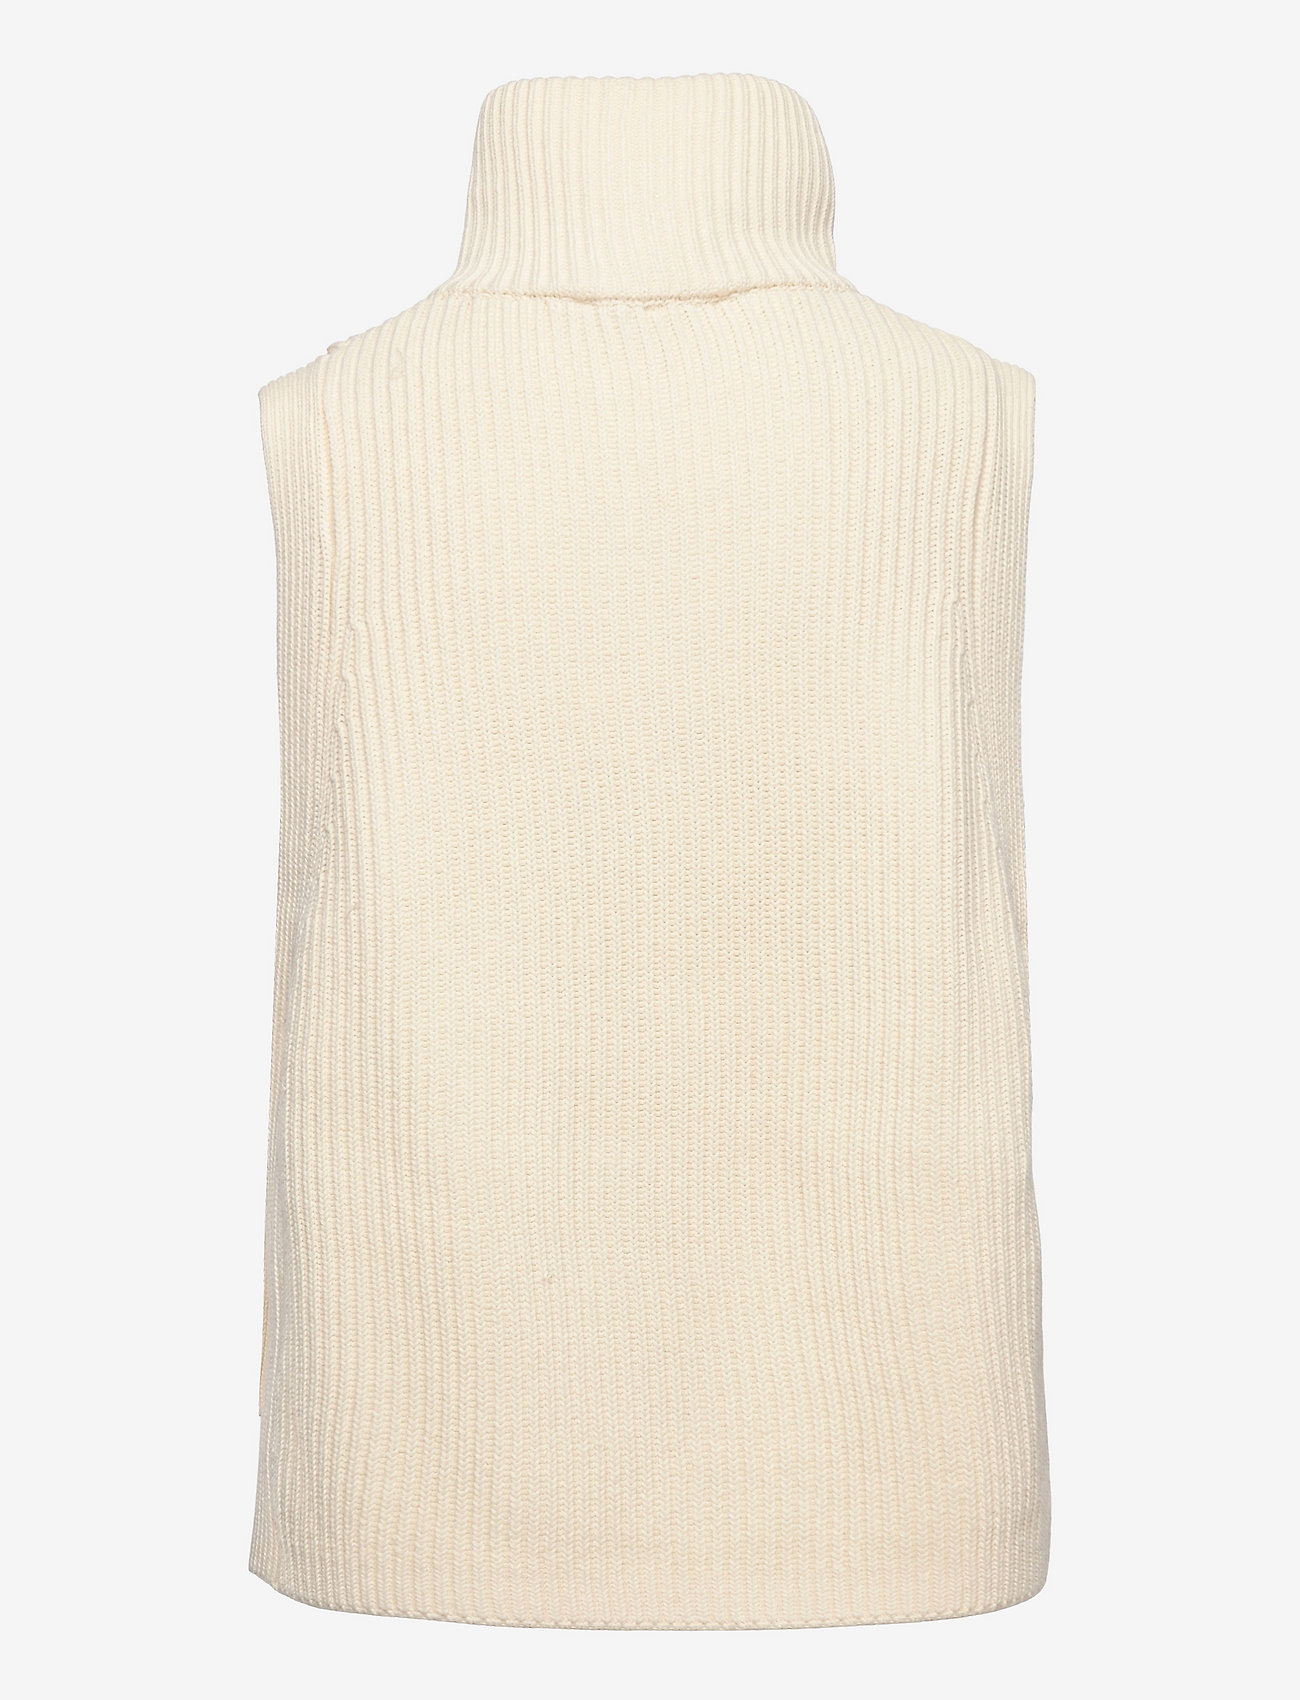 Just Female - Gorm zip vest - adītas vestes - off white - 1